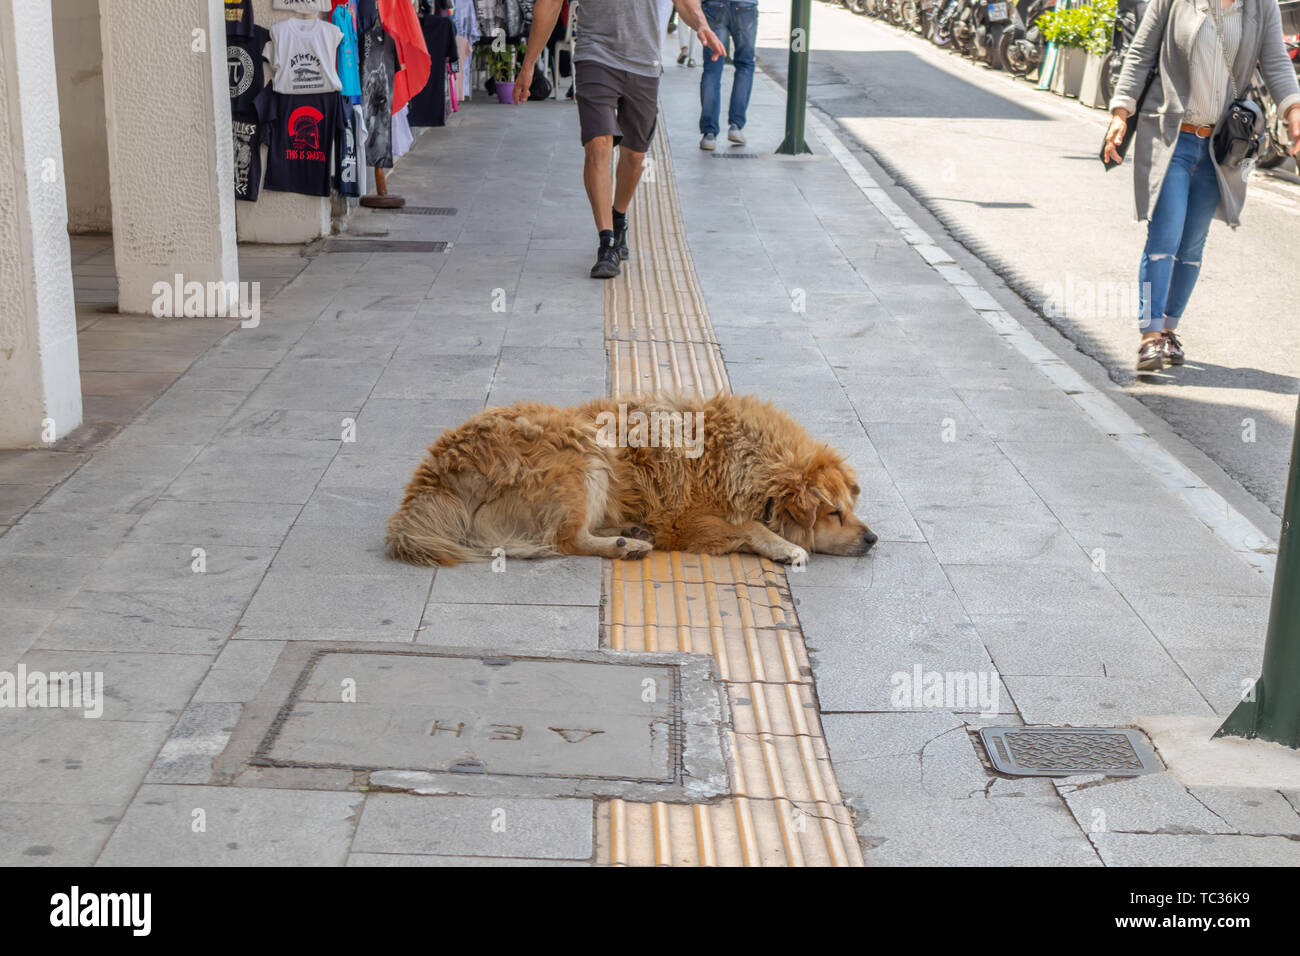 April 28, 2019. Athens, Greece. Sleeping dog. Brown abandoned animal sleeps in the middle of sidewalk. Market, people walking Stock Photo